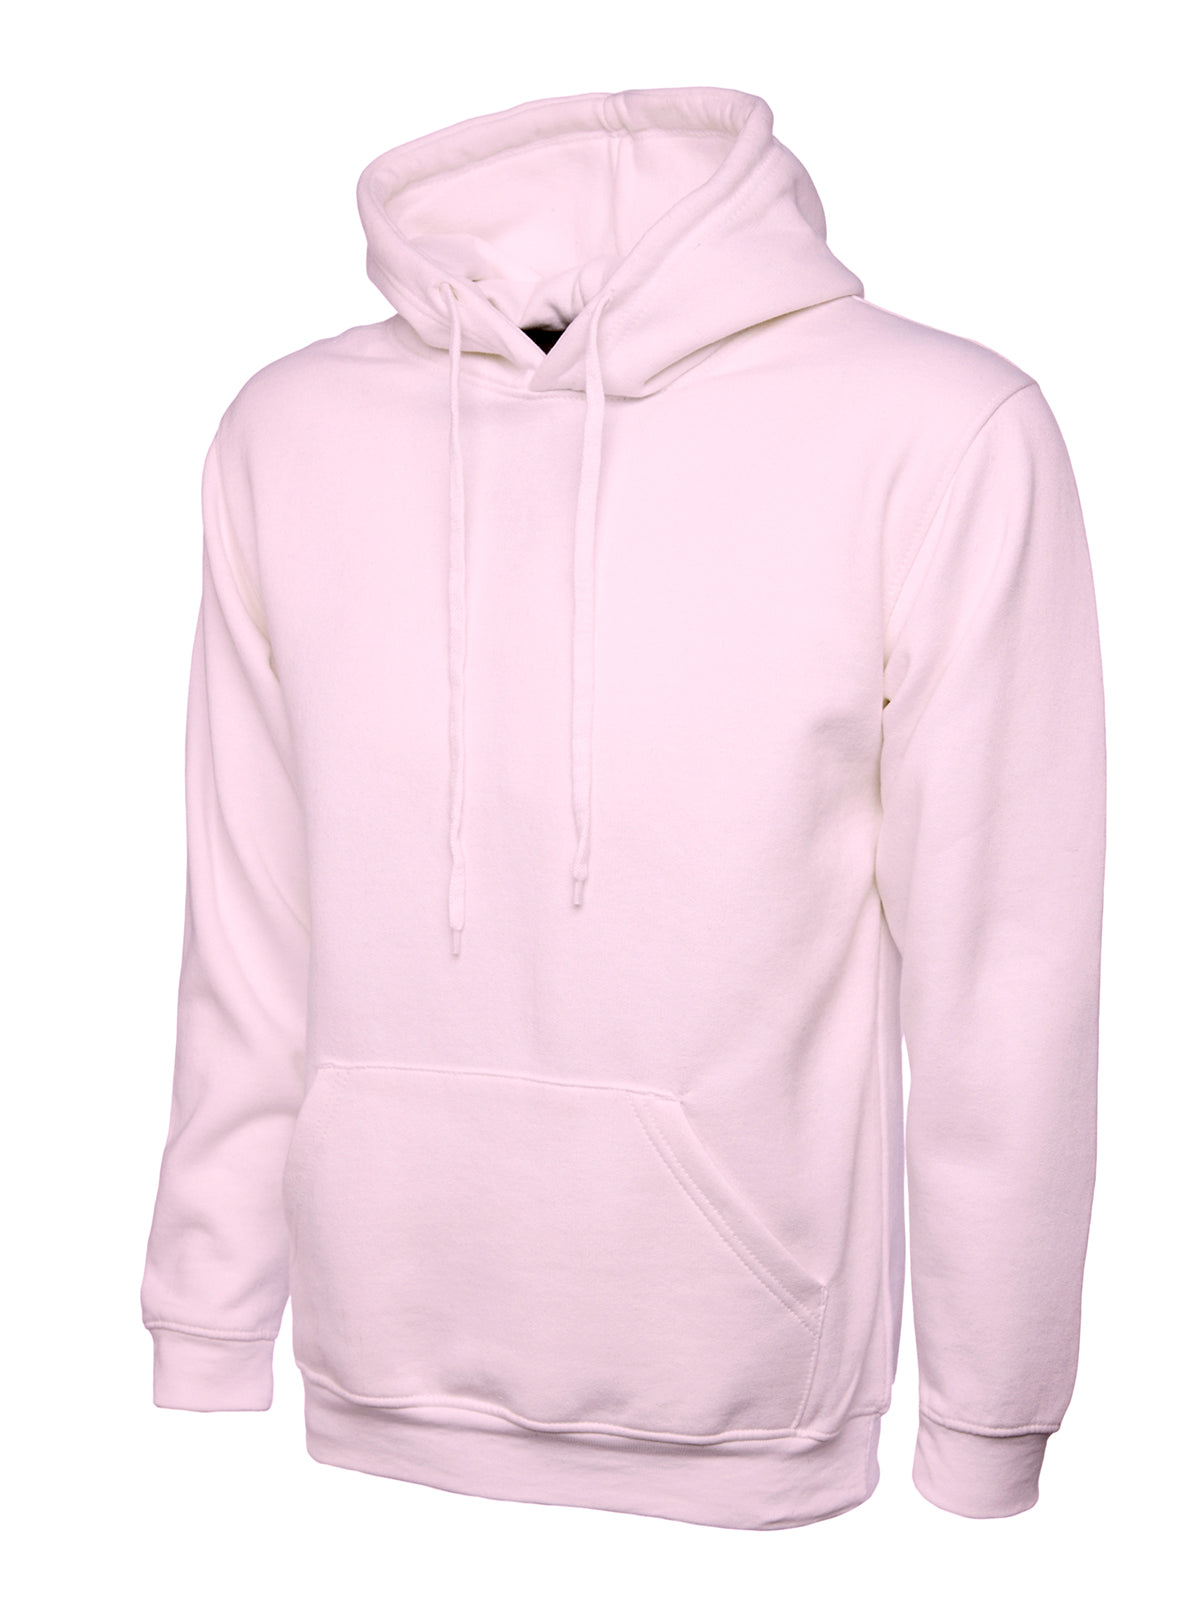 Uneek Ladies Deluxe Hooded Sweatshirt UC510 - Pink